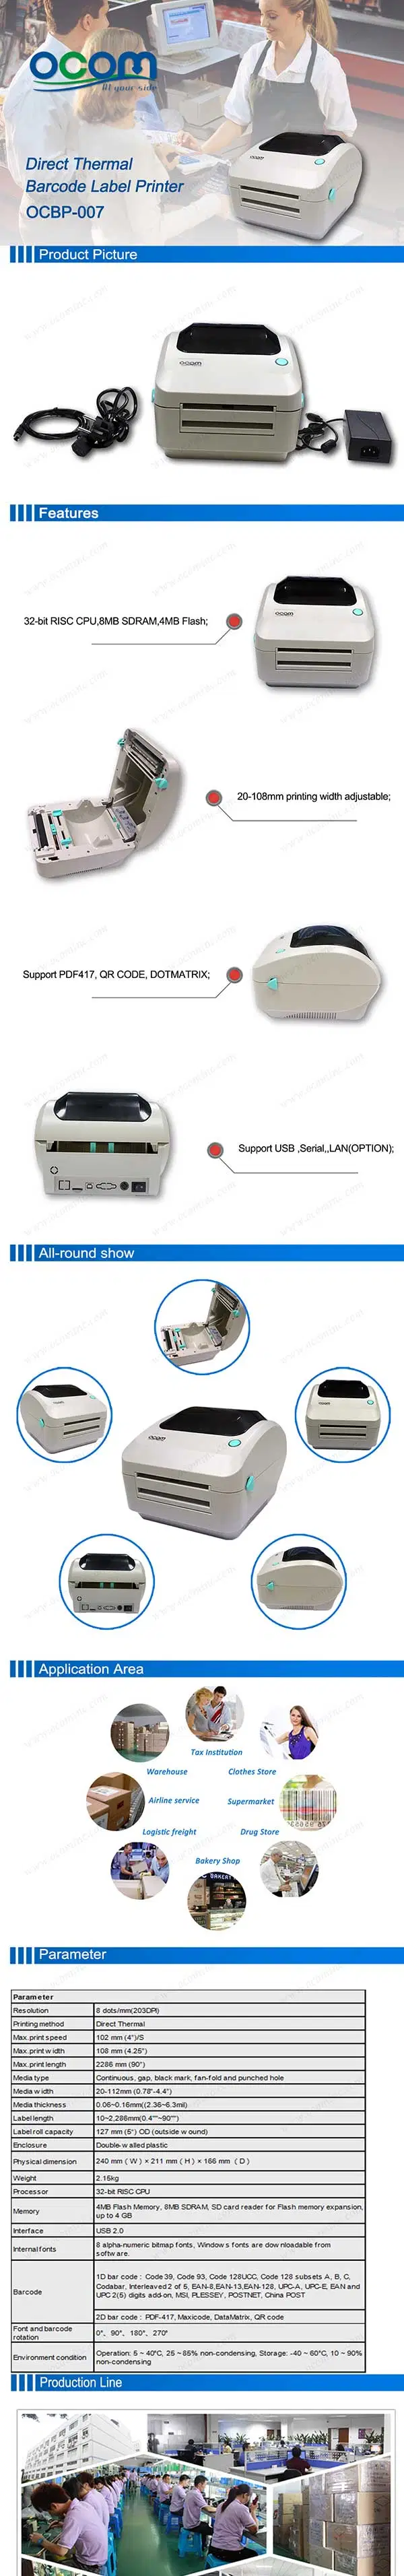 Label Barcode Printer Thermal Label Printer Thermal Receipt and Label Printer